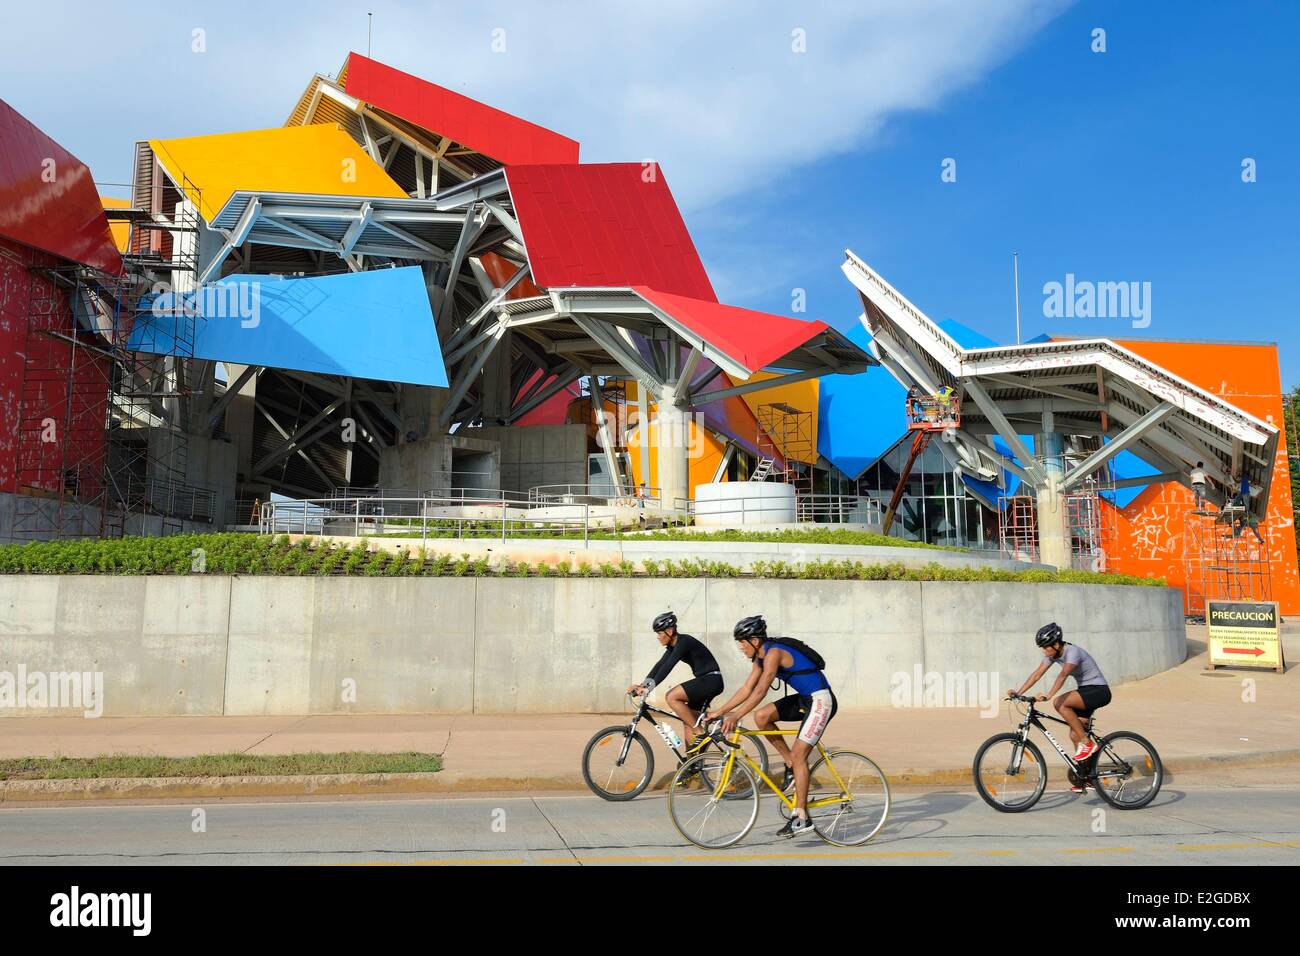 Panama Panama City Biodiversität Museum namens Panama Brücke des Lebens vom Architekten Frank Gehry Stockfoto